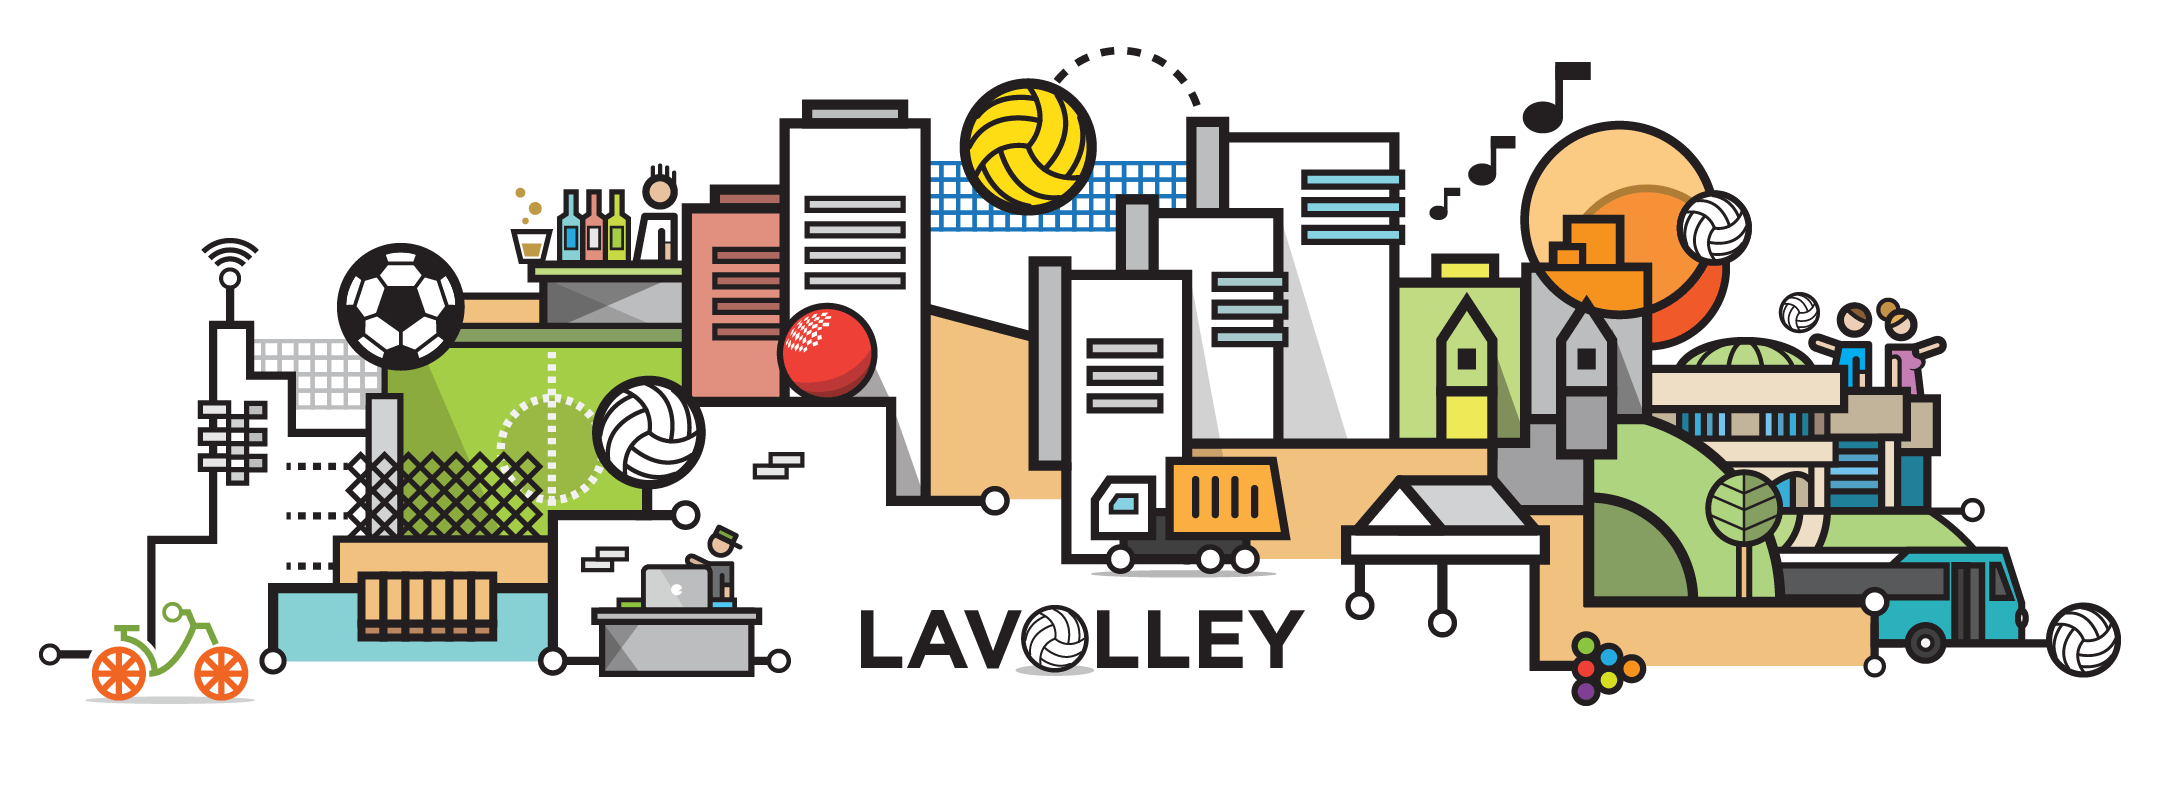 la-volley-cityline-illustration-by-loogart